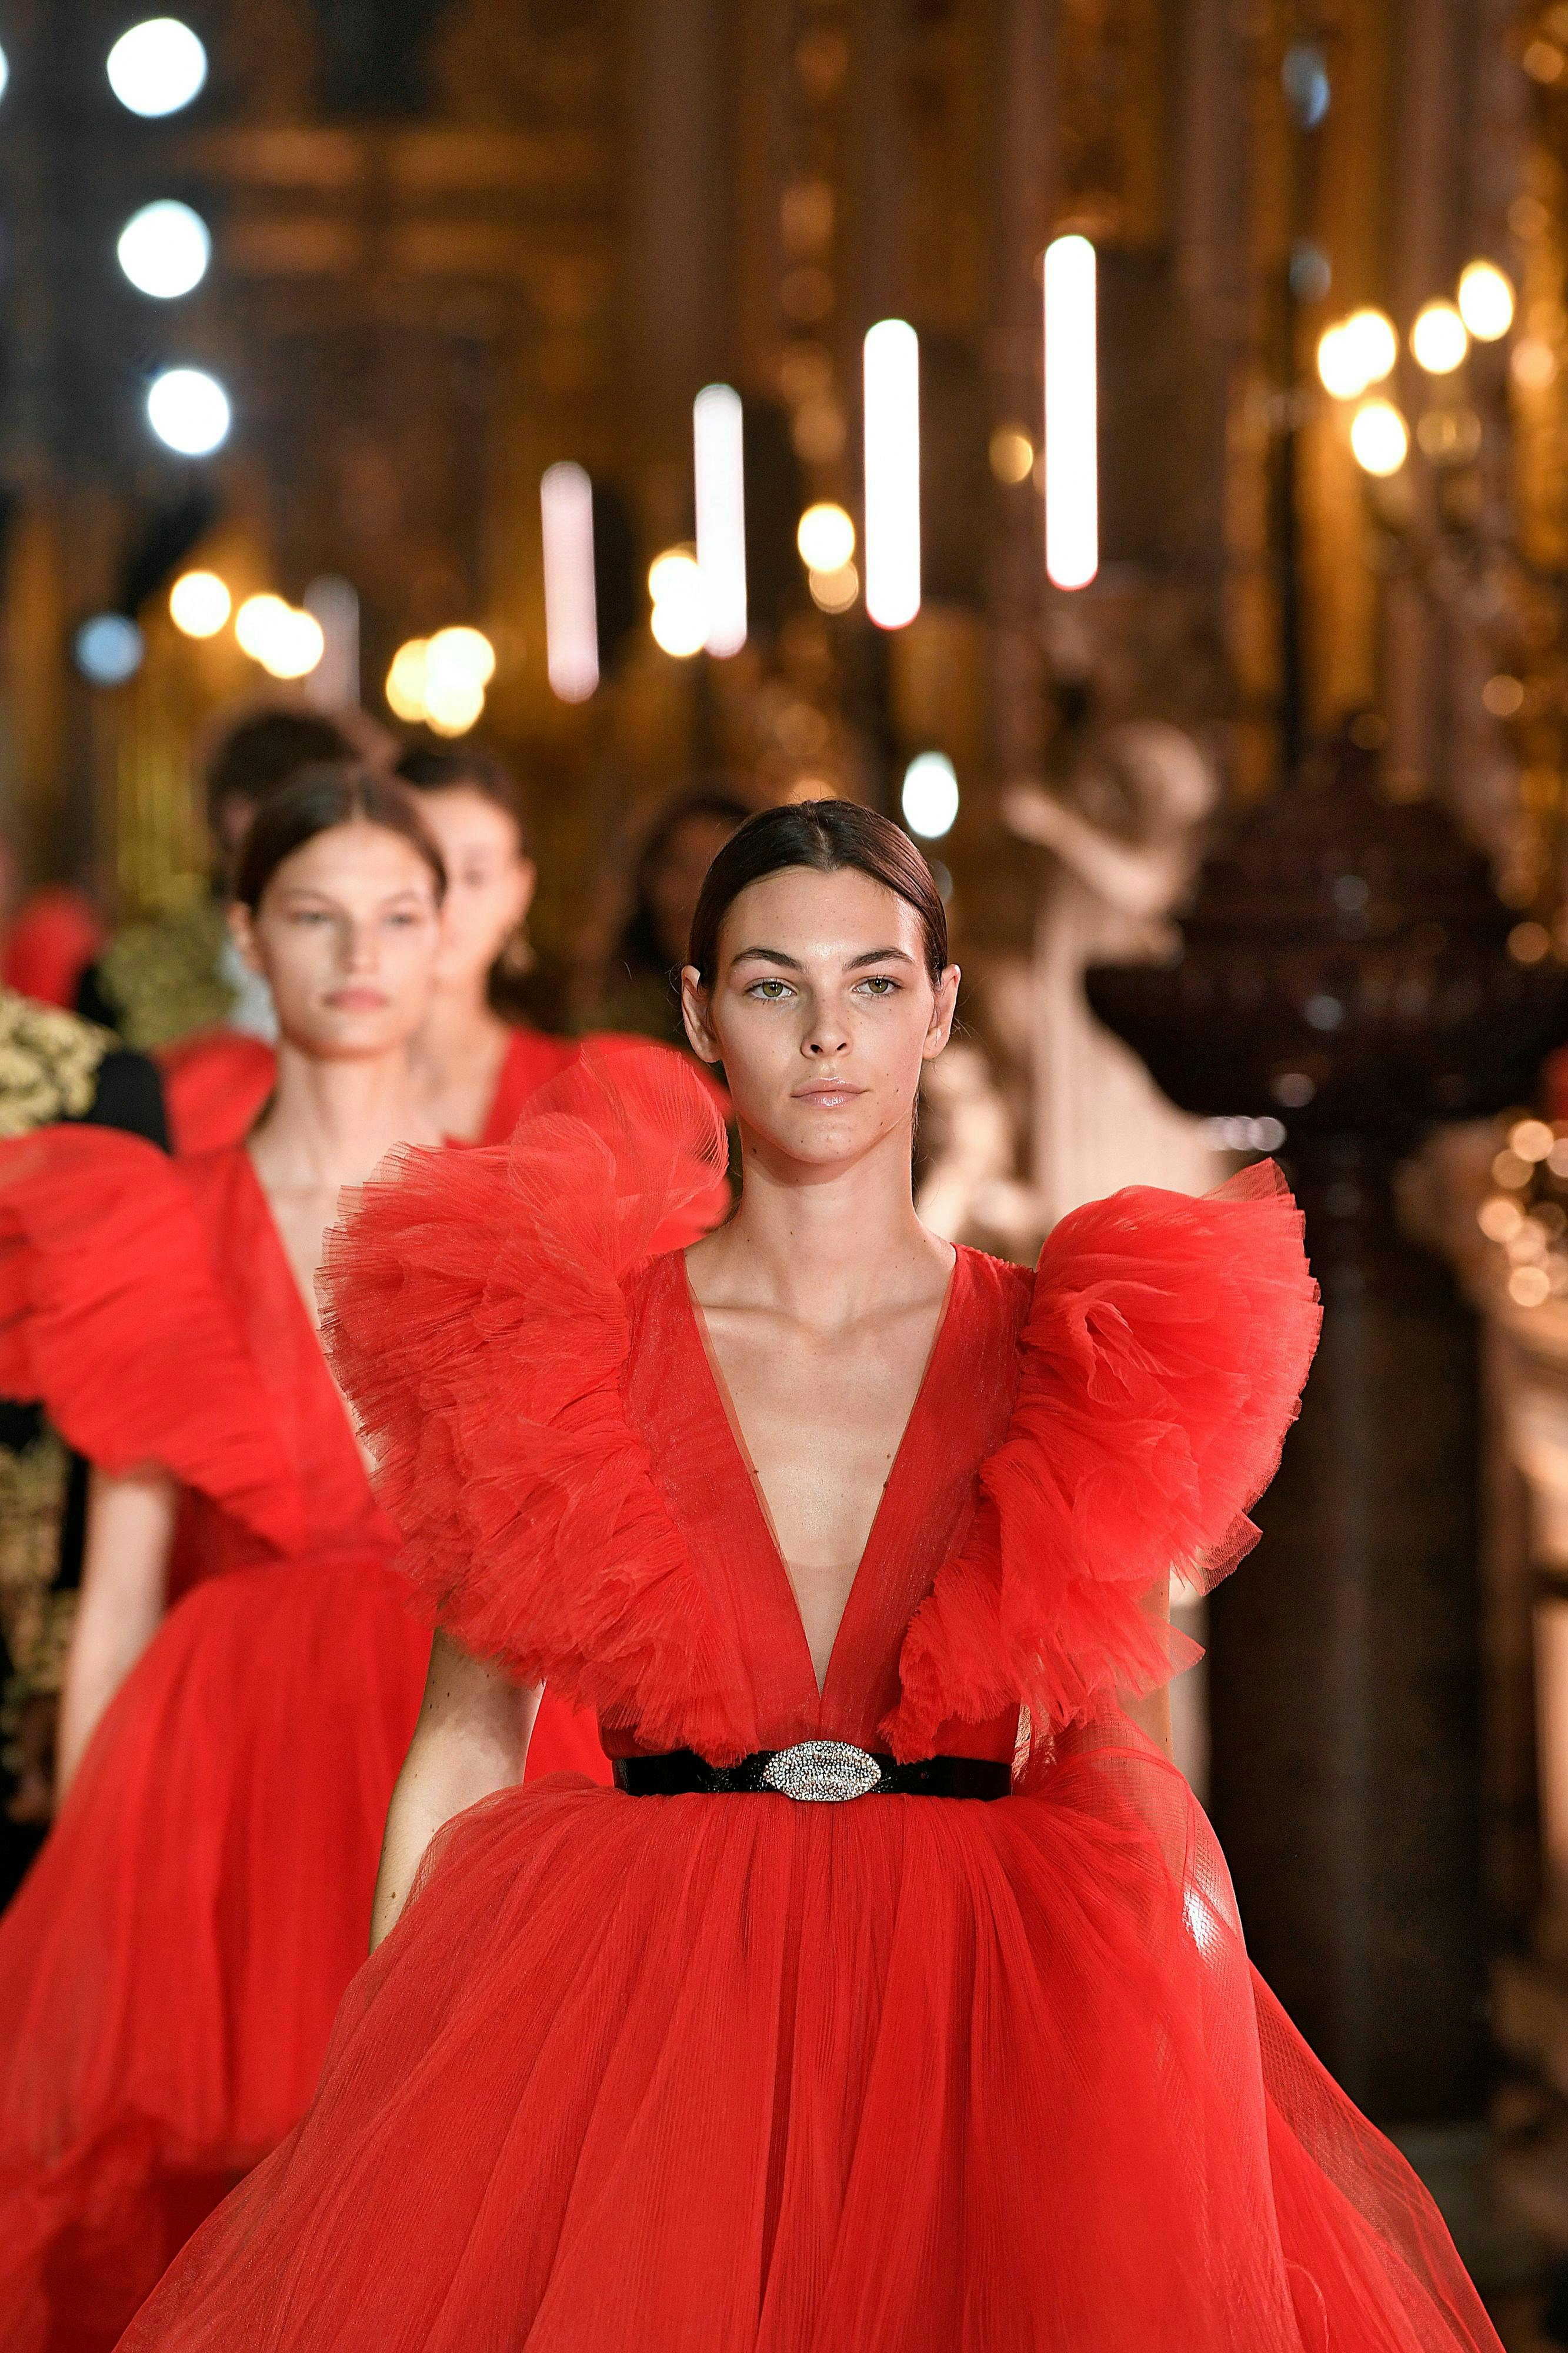 giambattista valli x hm nowfashion ready to wear rome catwalk collection fashion show runway person human clothing apparel fashion evening dress gown robe